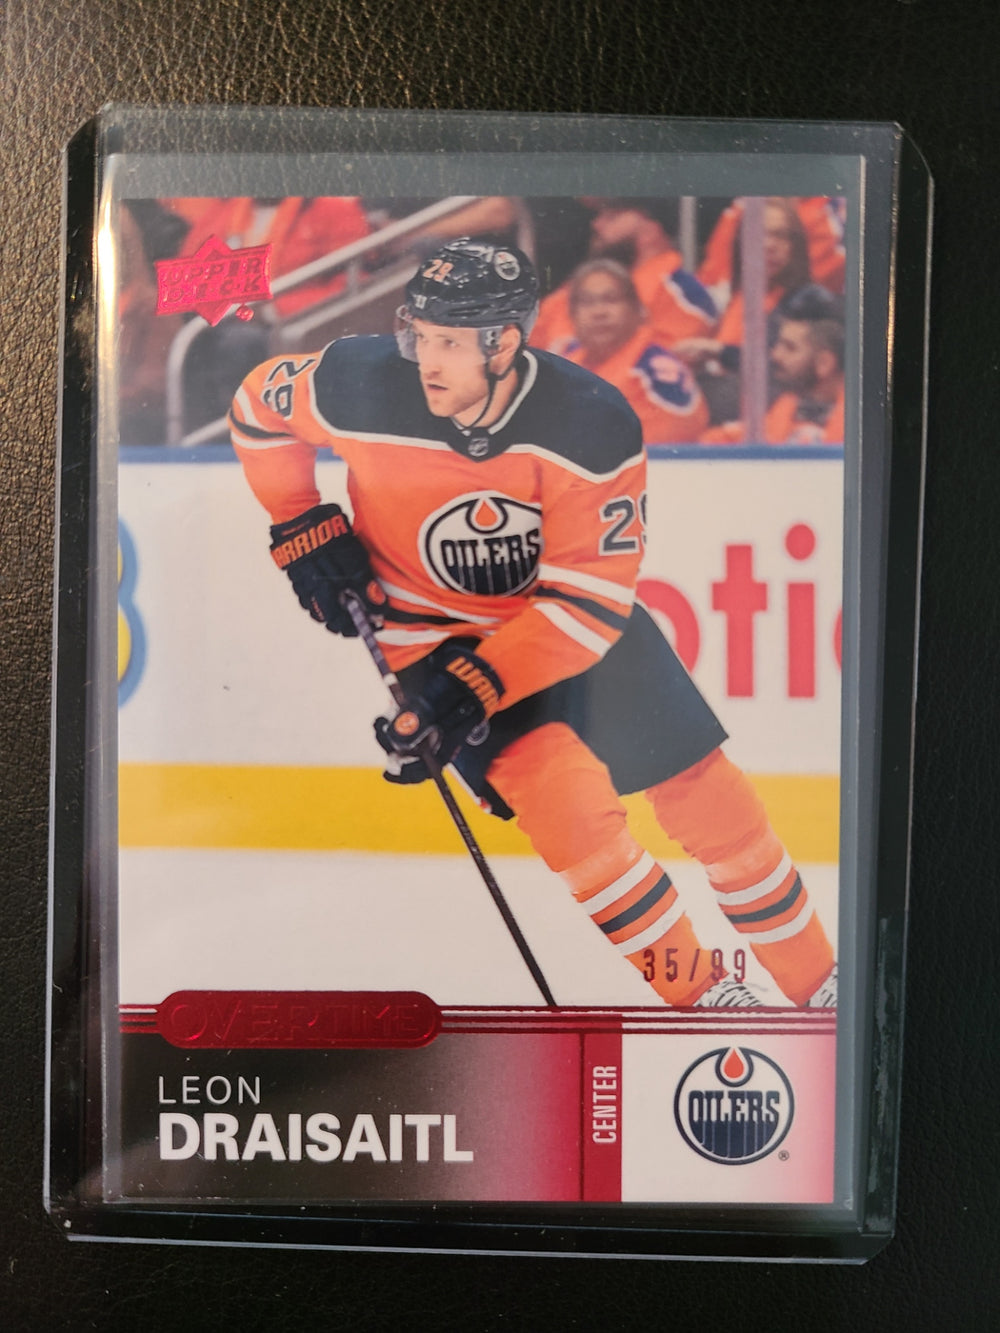 2019-20 Overtime Red Parallel #138 Leon Draisaitl Edmonton Oilers 35/99